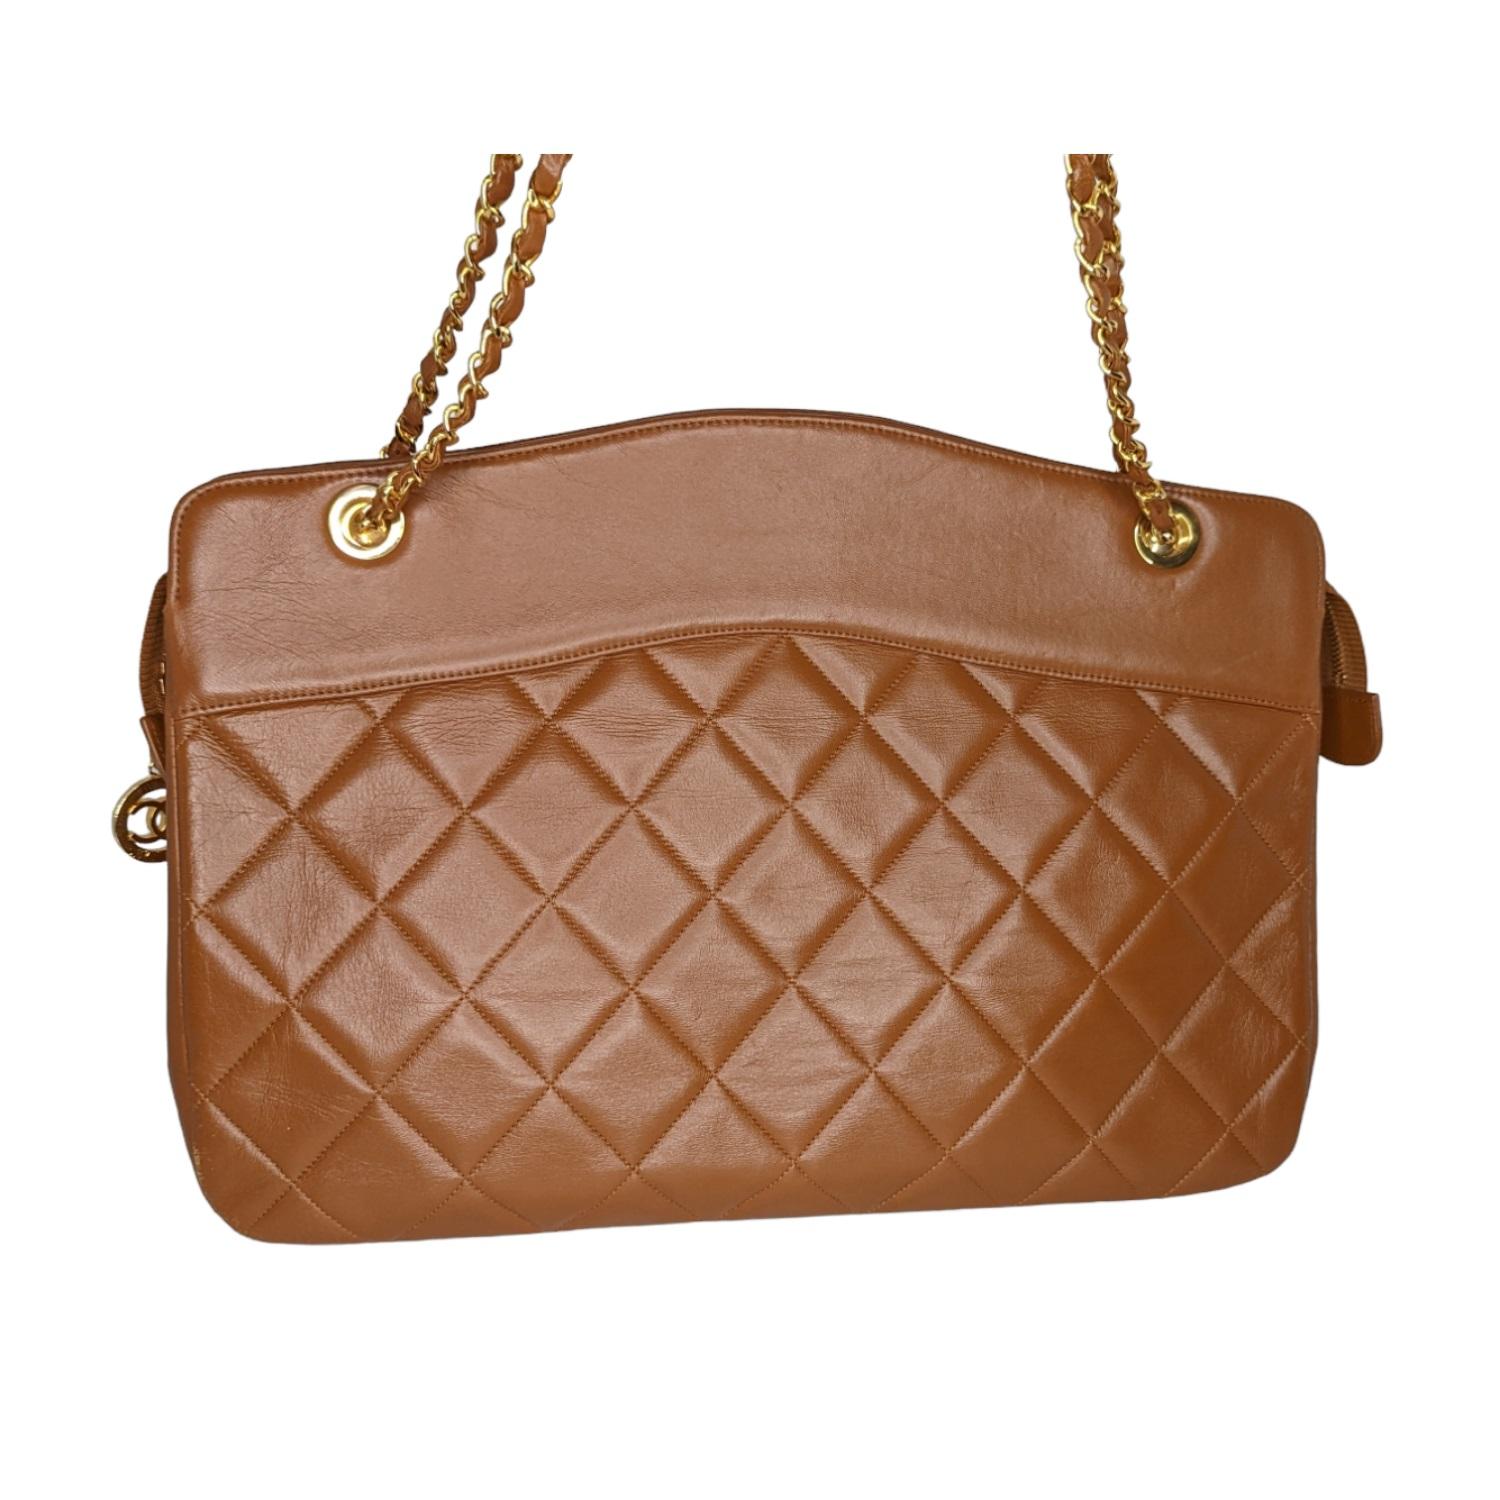 Chanel Vintage Matelassé Chain Leather Shoulder Bag & Wallet In Good Condition For Sale In Scottsdale, AZ